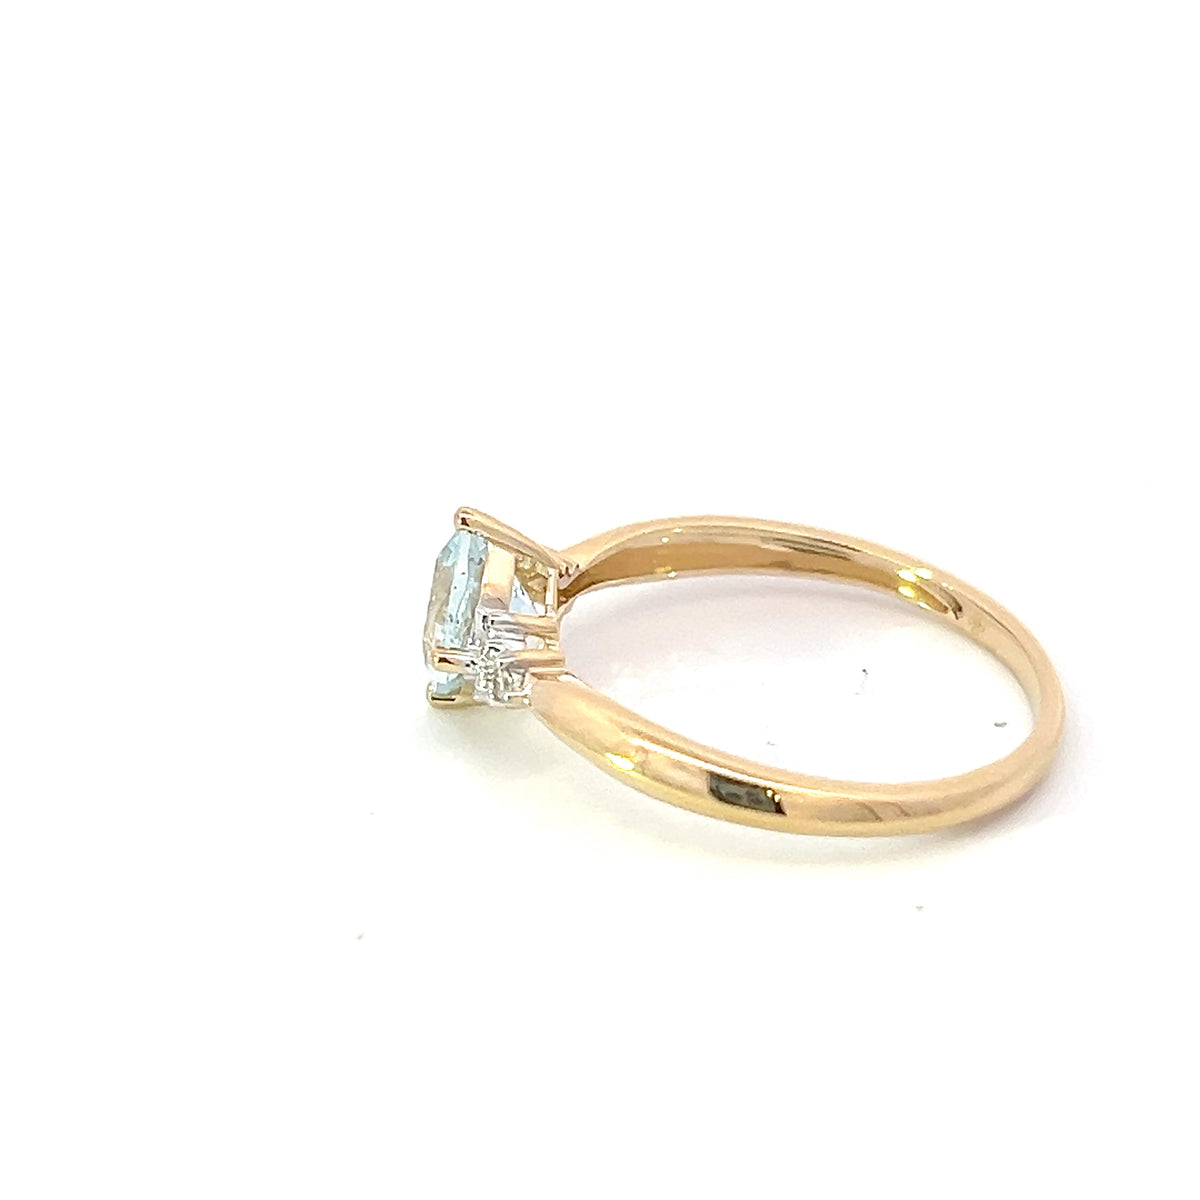 10K Yellow Gold 0.76cttw Aquamarine and 0.008cttw Diamond Ring, size 7